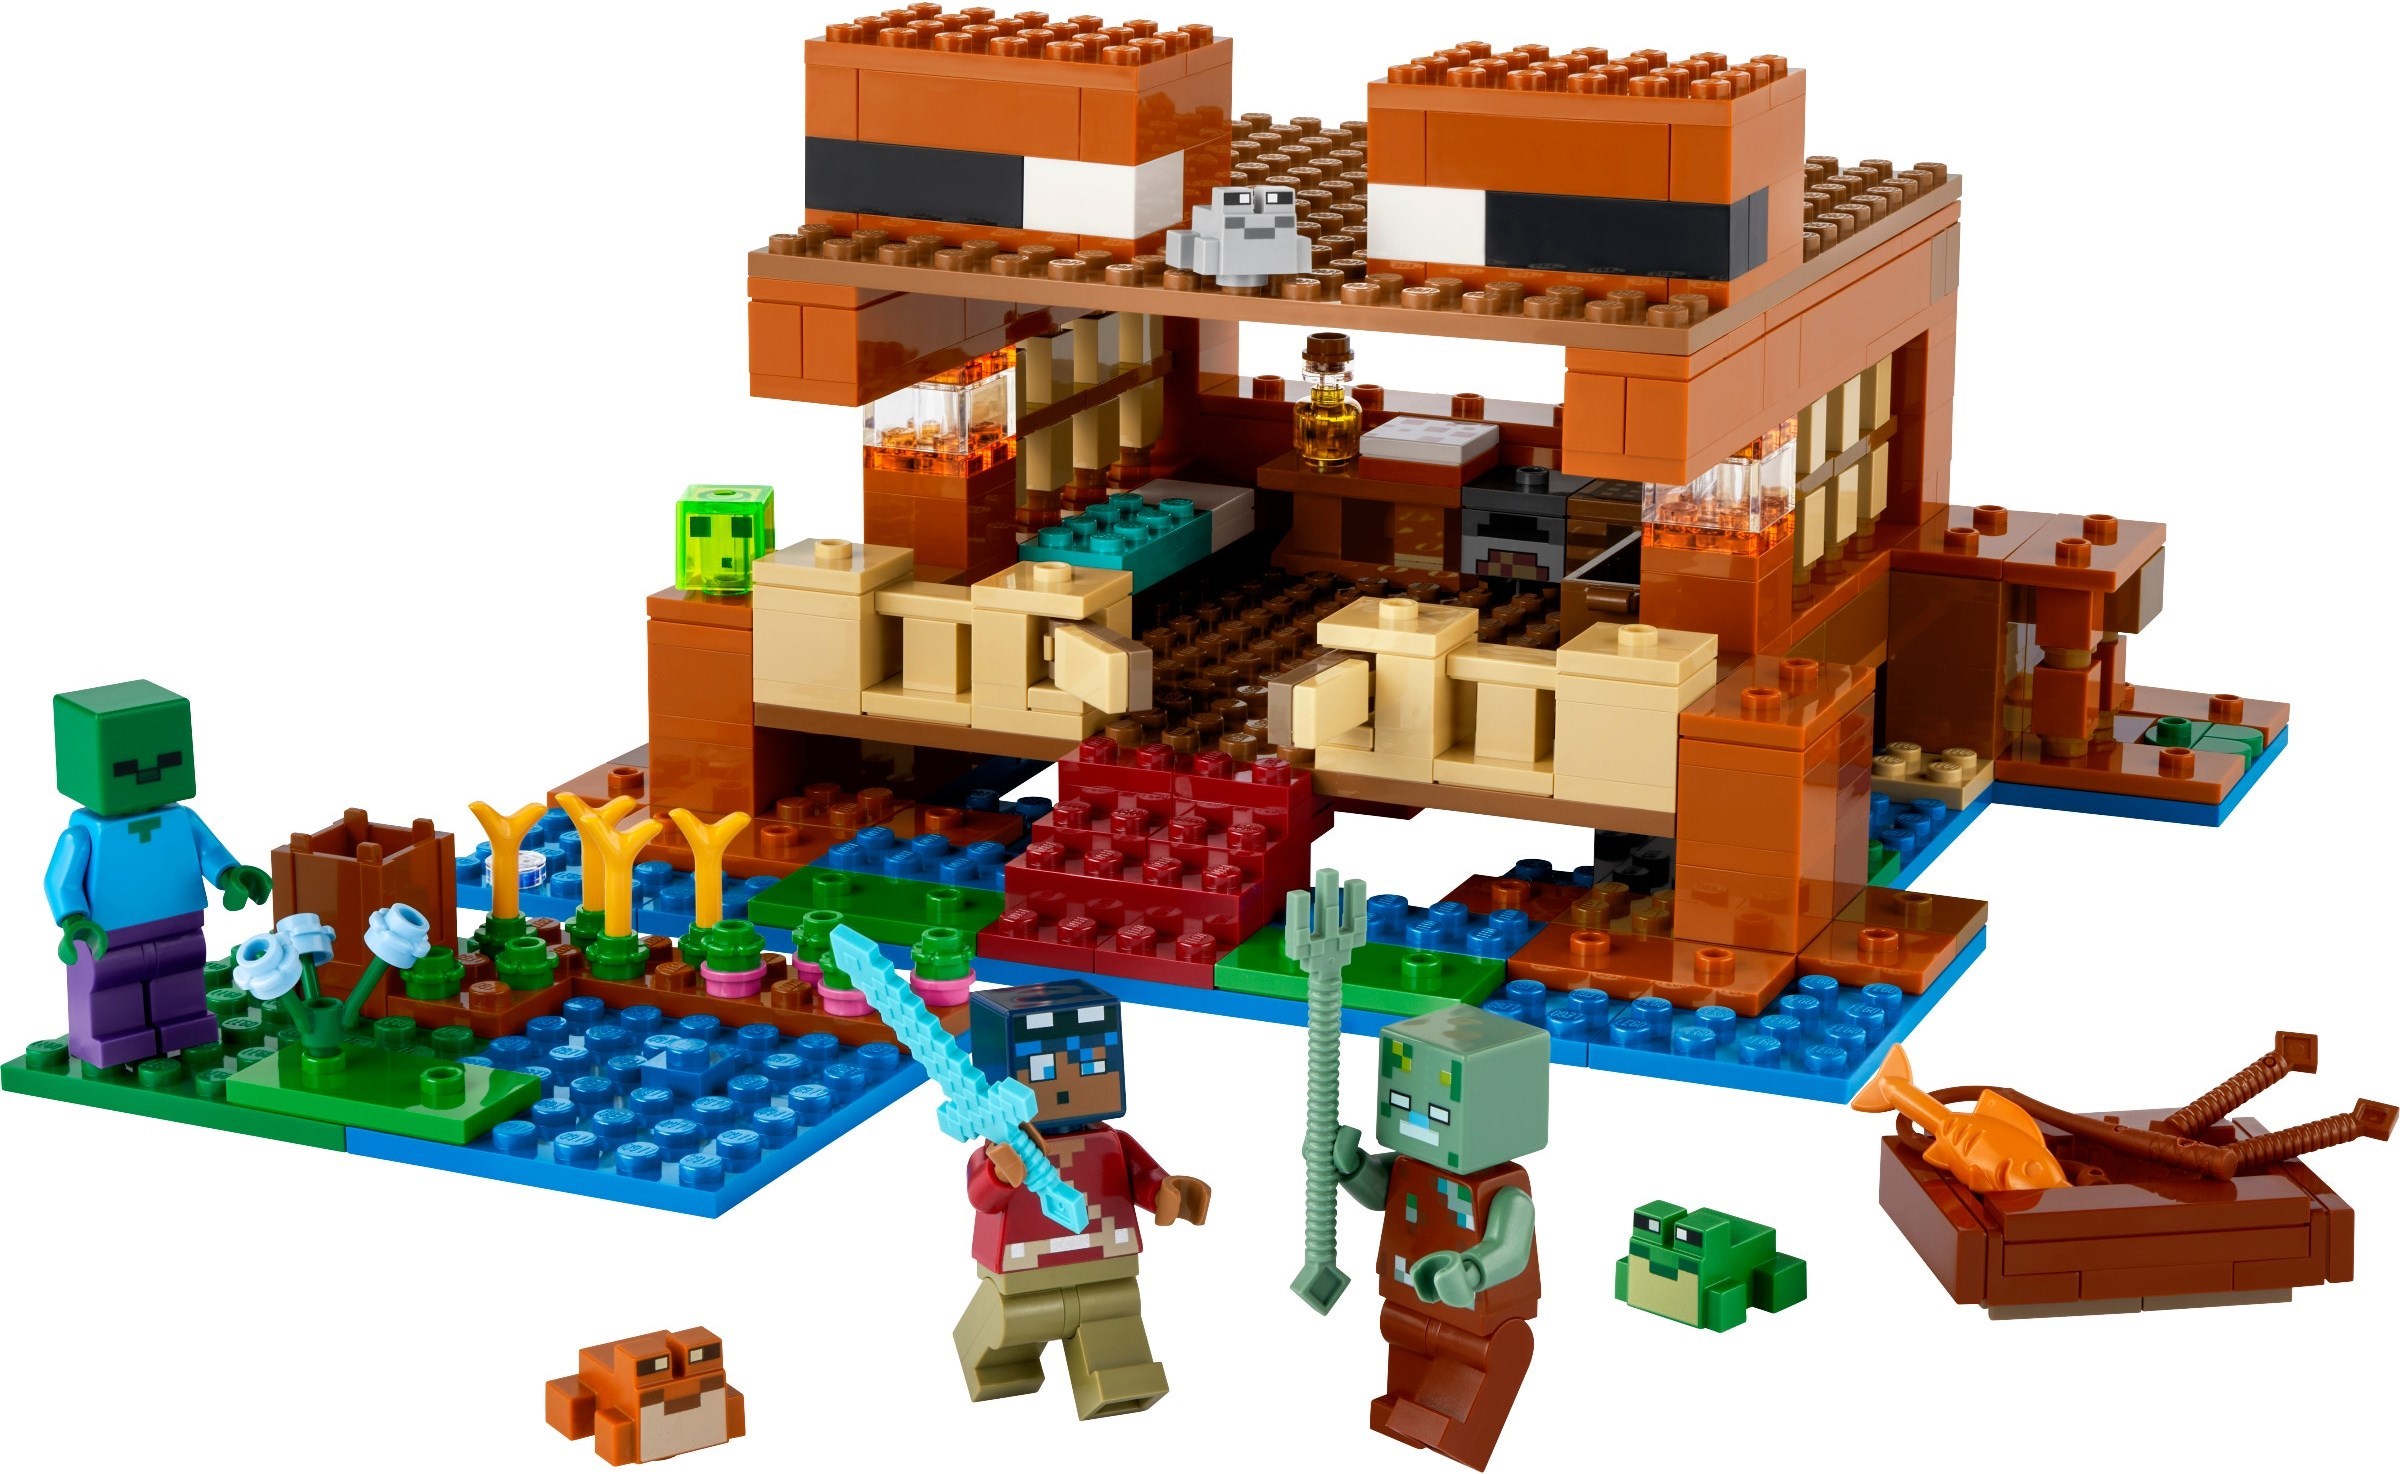 LEGO Technic Archives - BrickTastic